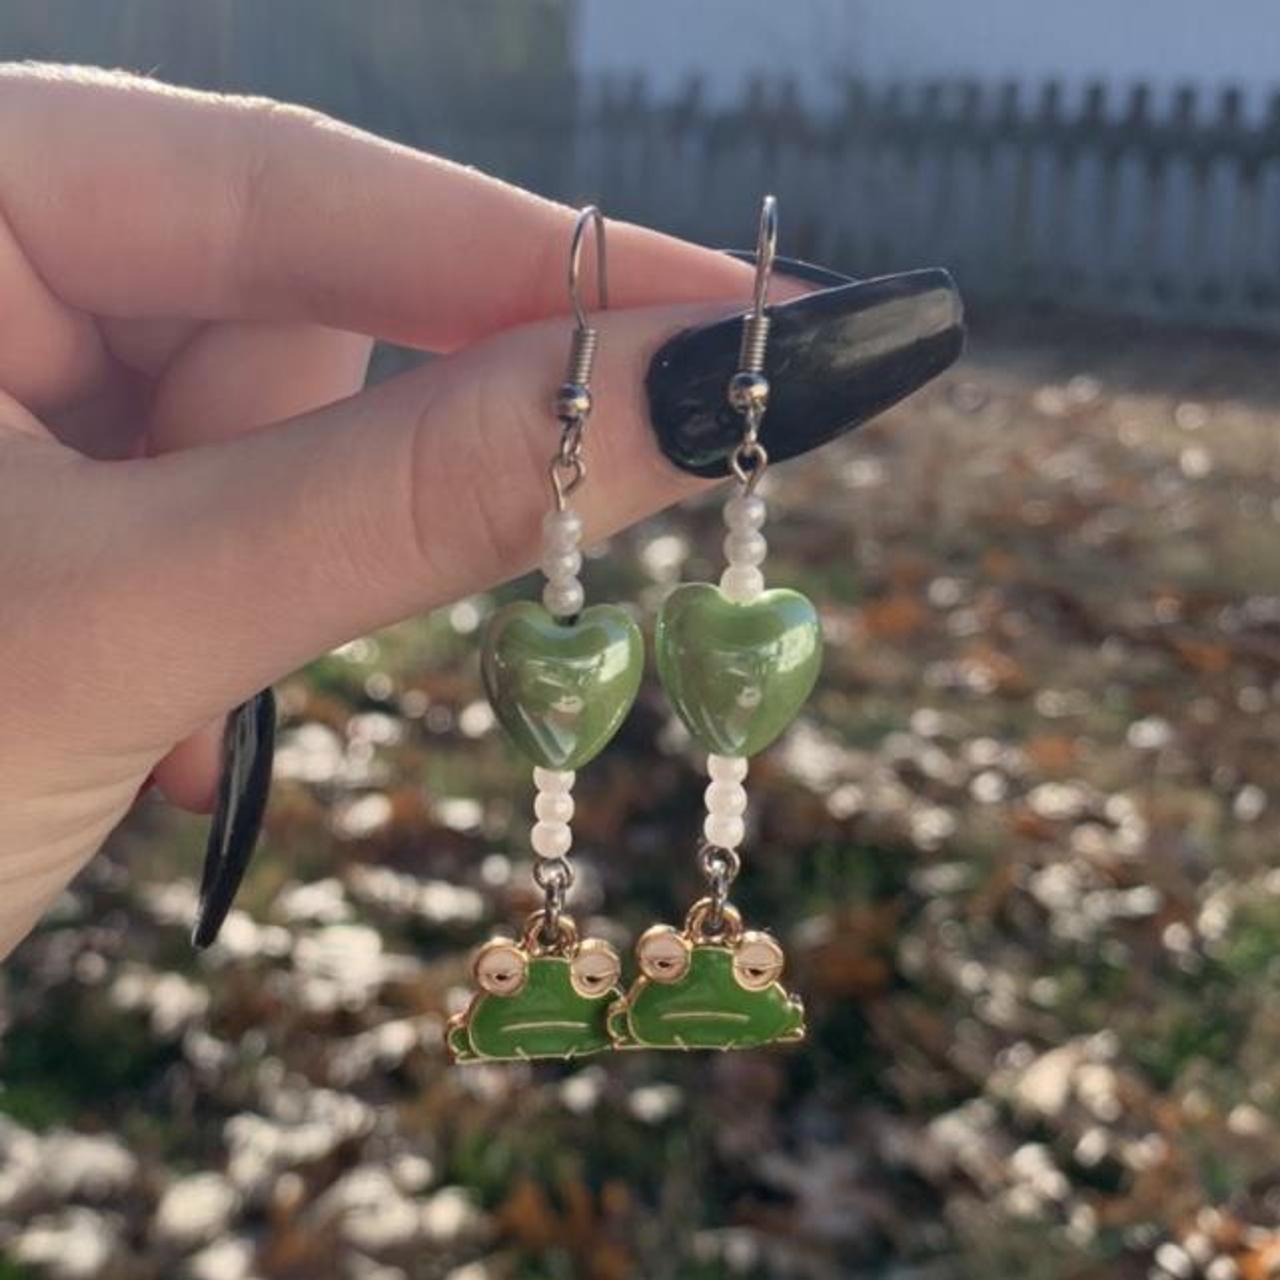 Product Image 1 - The froggy heartache earrings! 🦋

Handmade